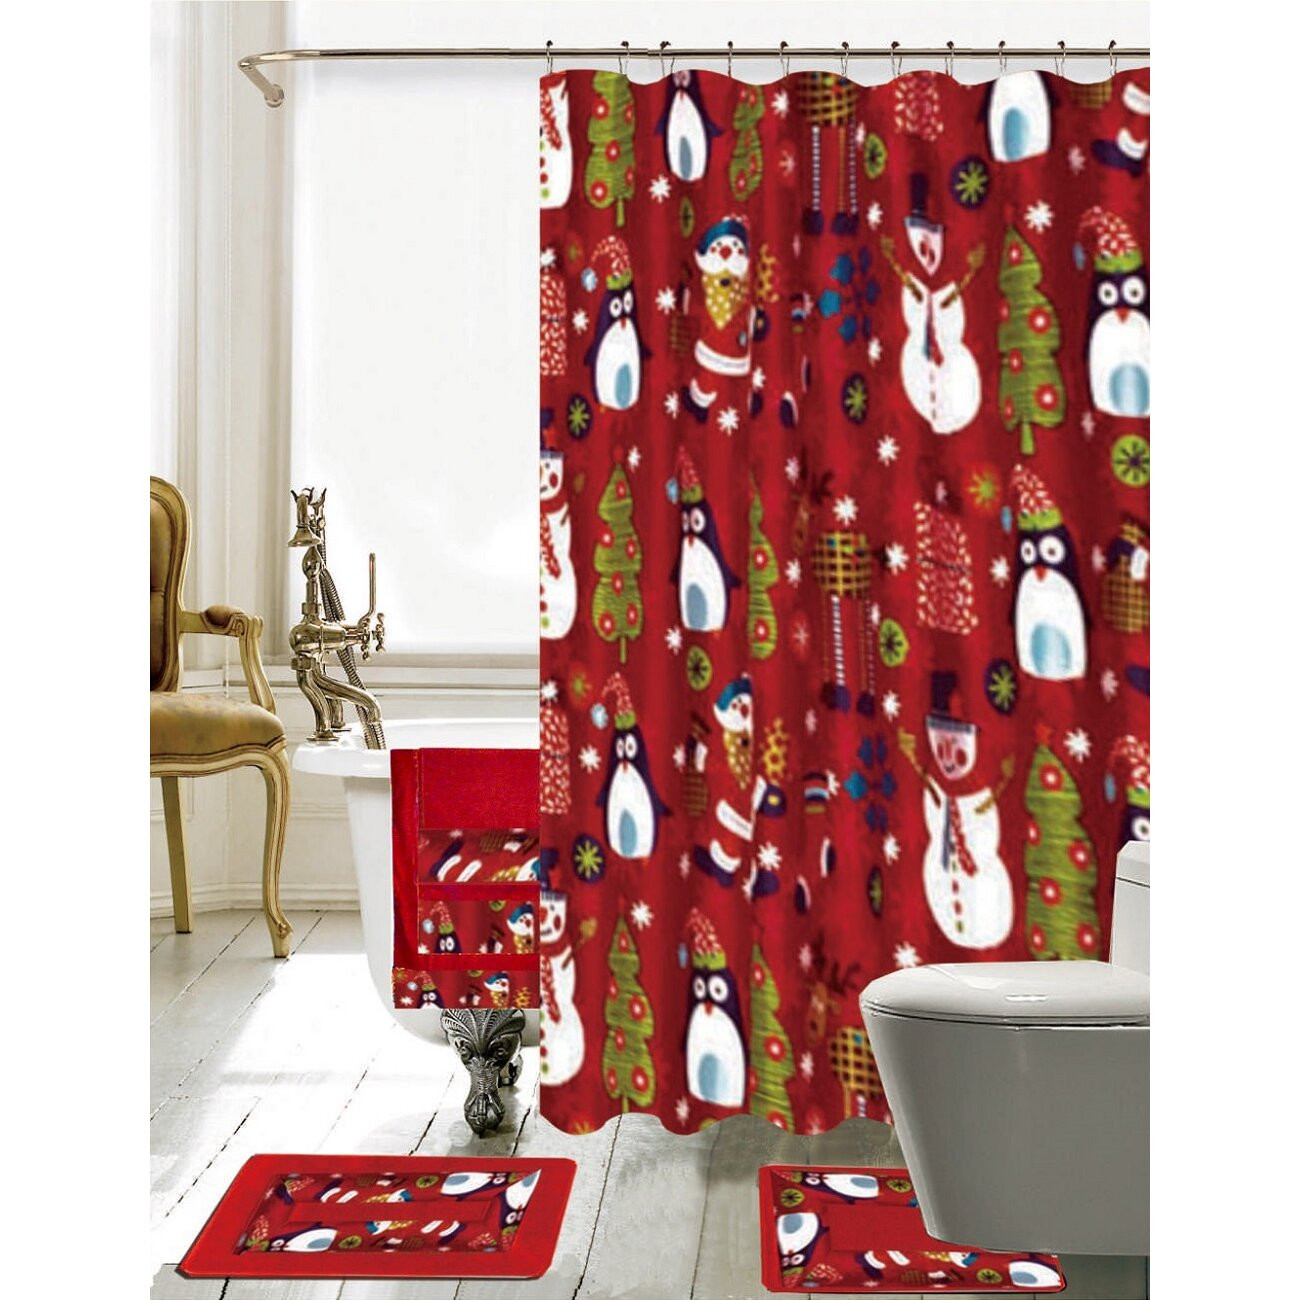 Christmas Bathroom Shower Curtains
 Daniels Bath Christmas Bathroom Decor 18 Piece Shower